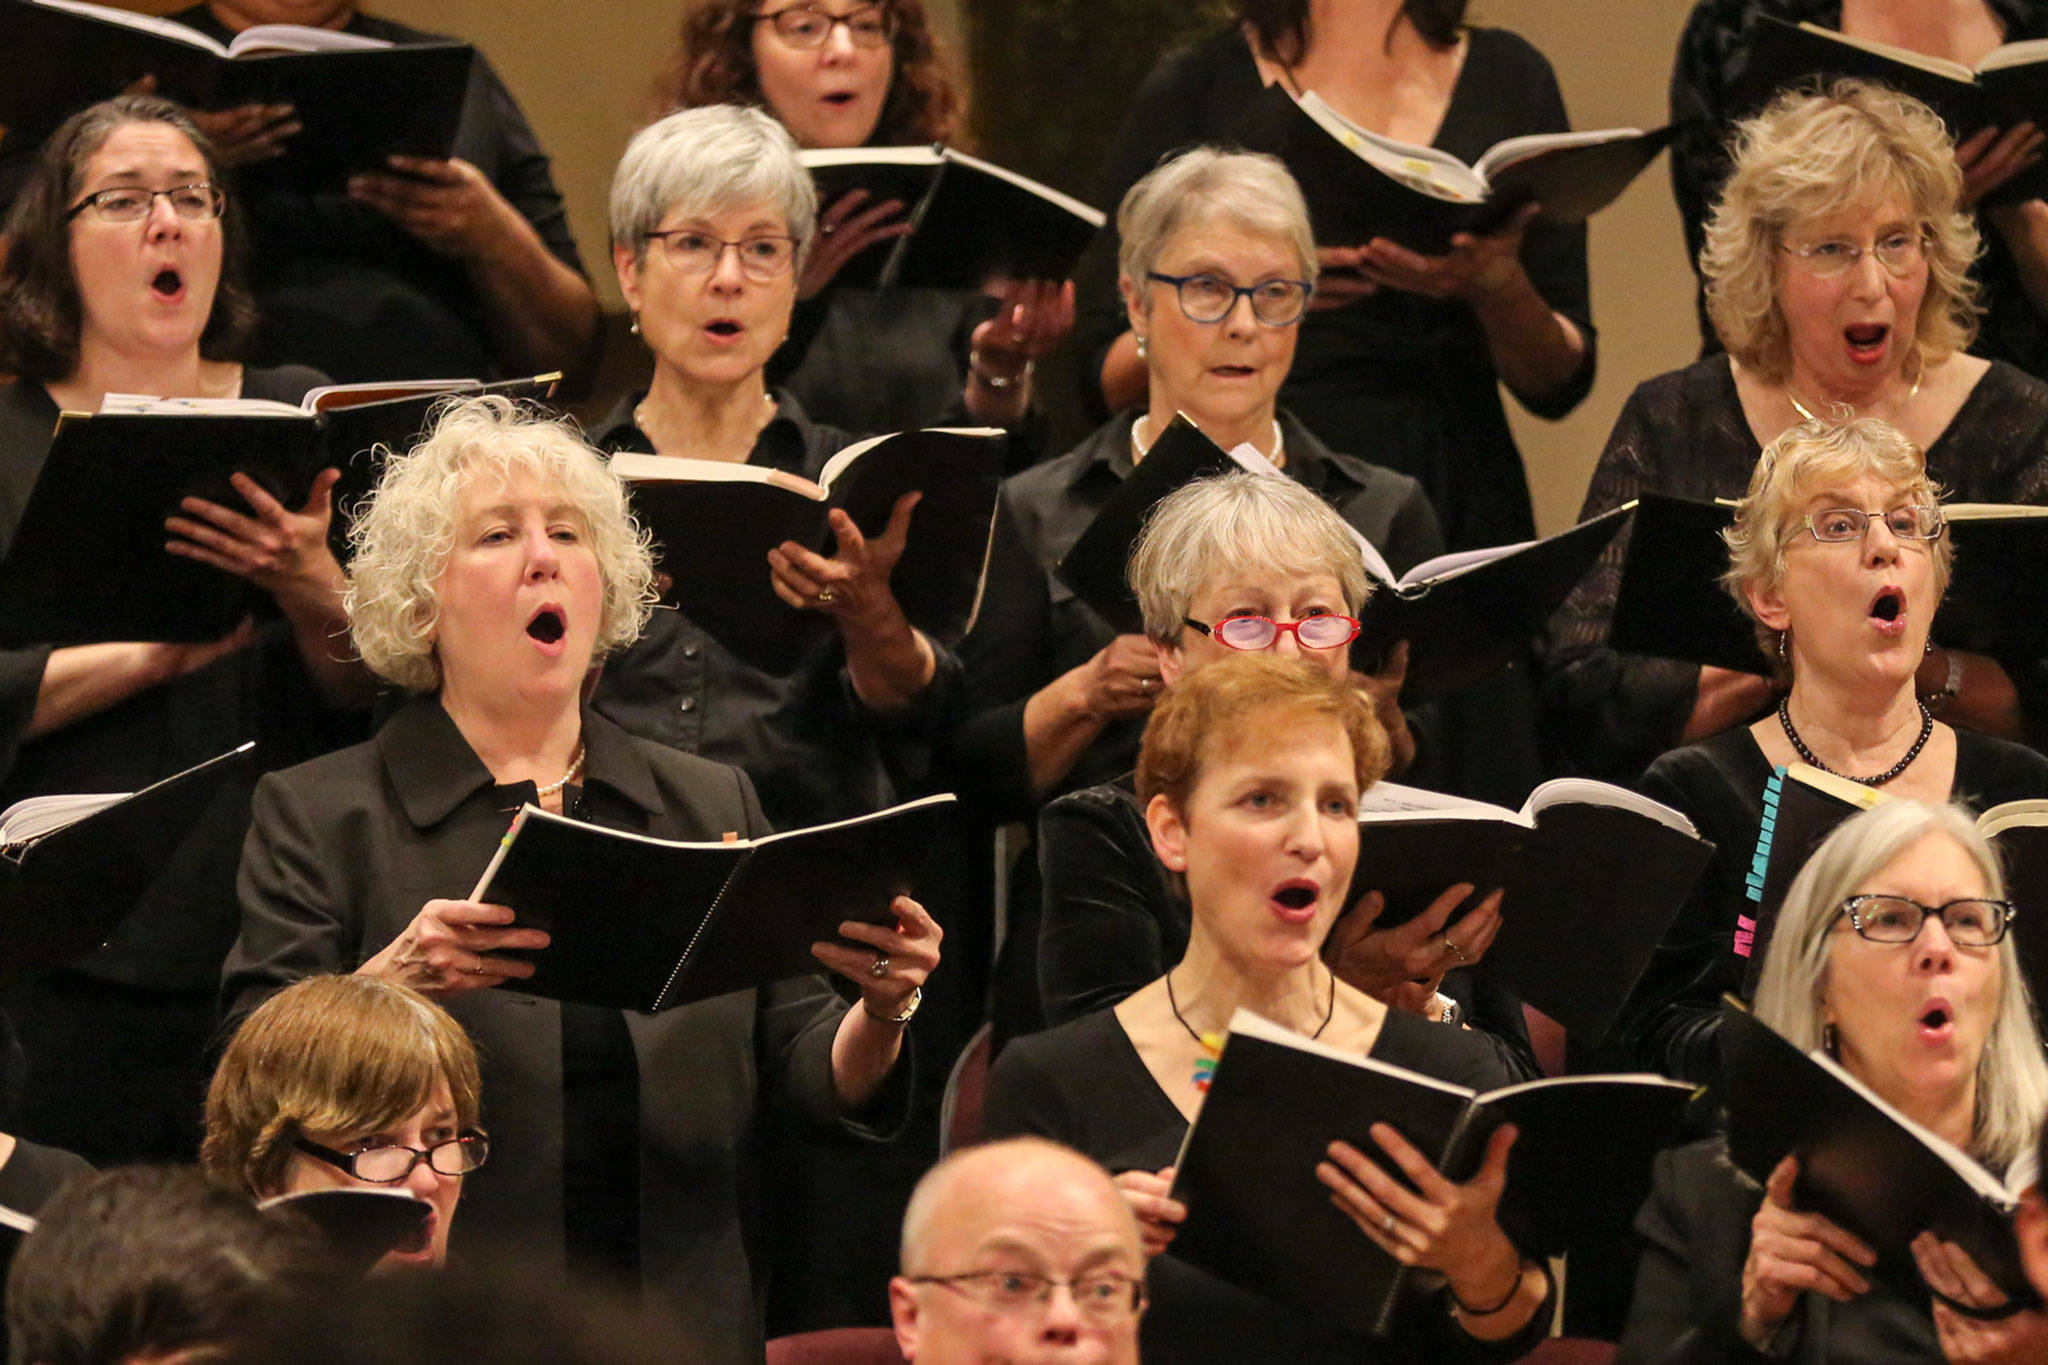 Members of the Northwest Chorale perform Handel’s “Messiah” on Dec. 9 at Edmonds United Methodist Church in Edmonds. (Kevin Clark / The Herald)